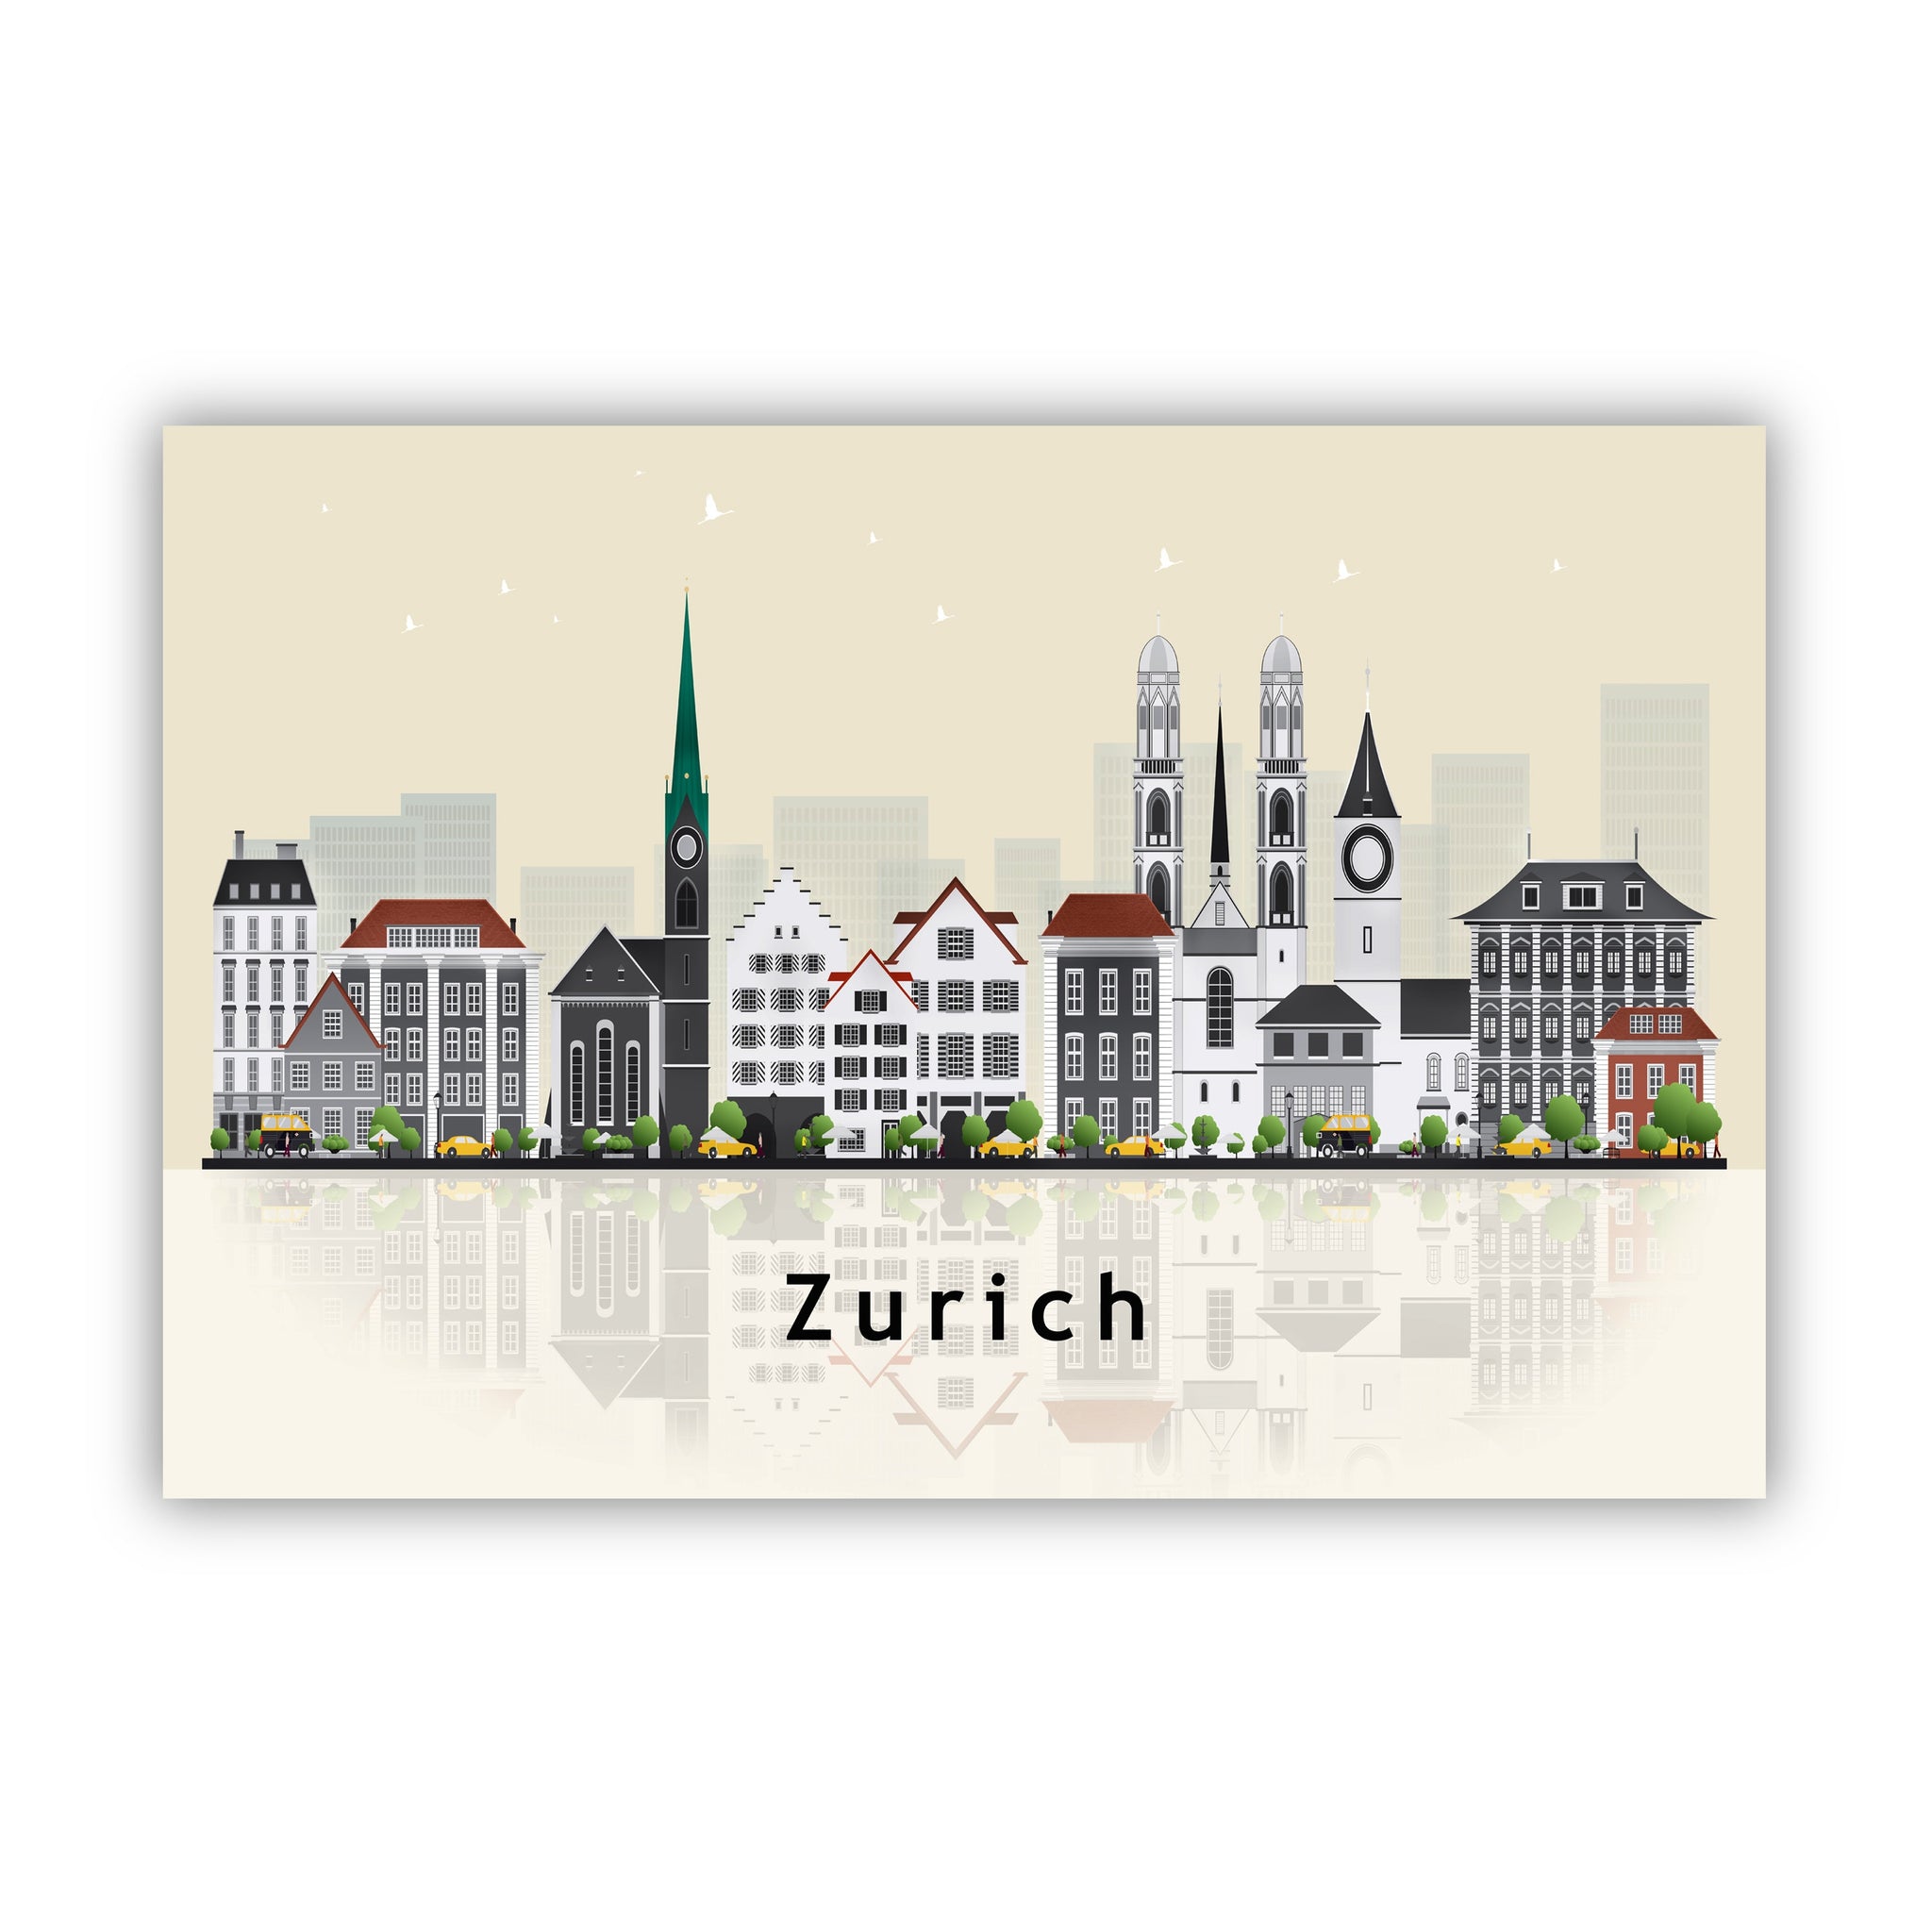 ZURICH SWITZERLAND Illustration skyline poster, Modern skyline cityscape poster print, Landmark map poster, Home wall art decoration